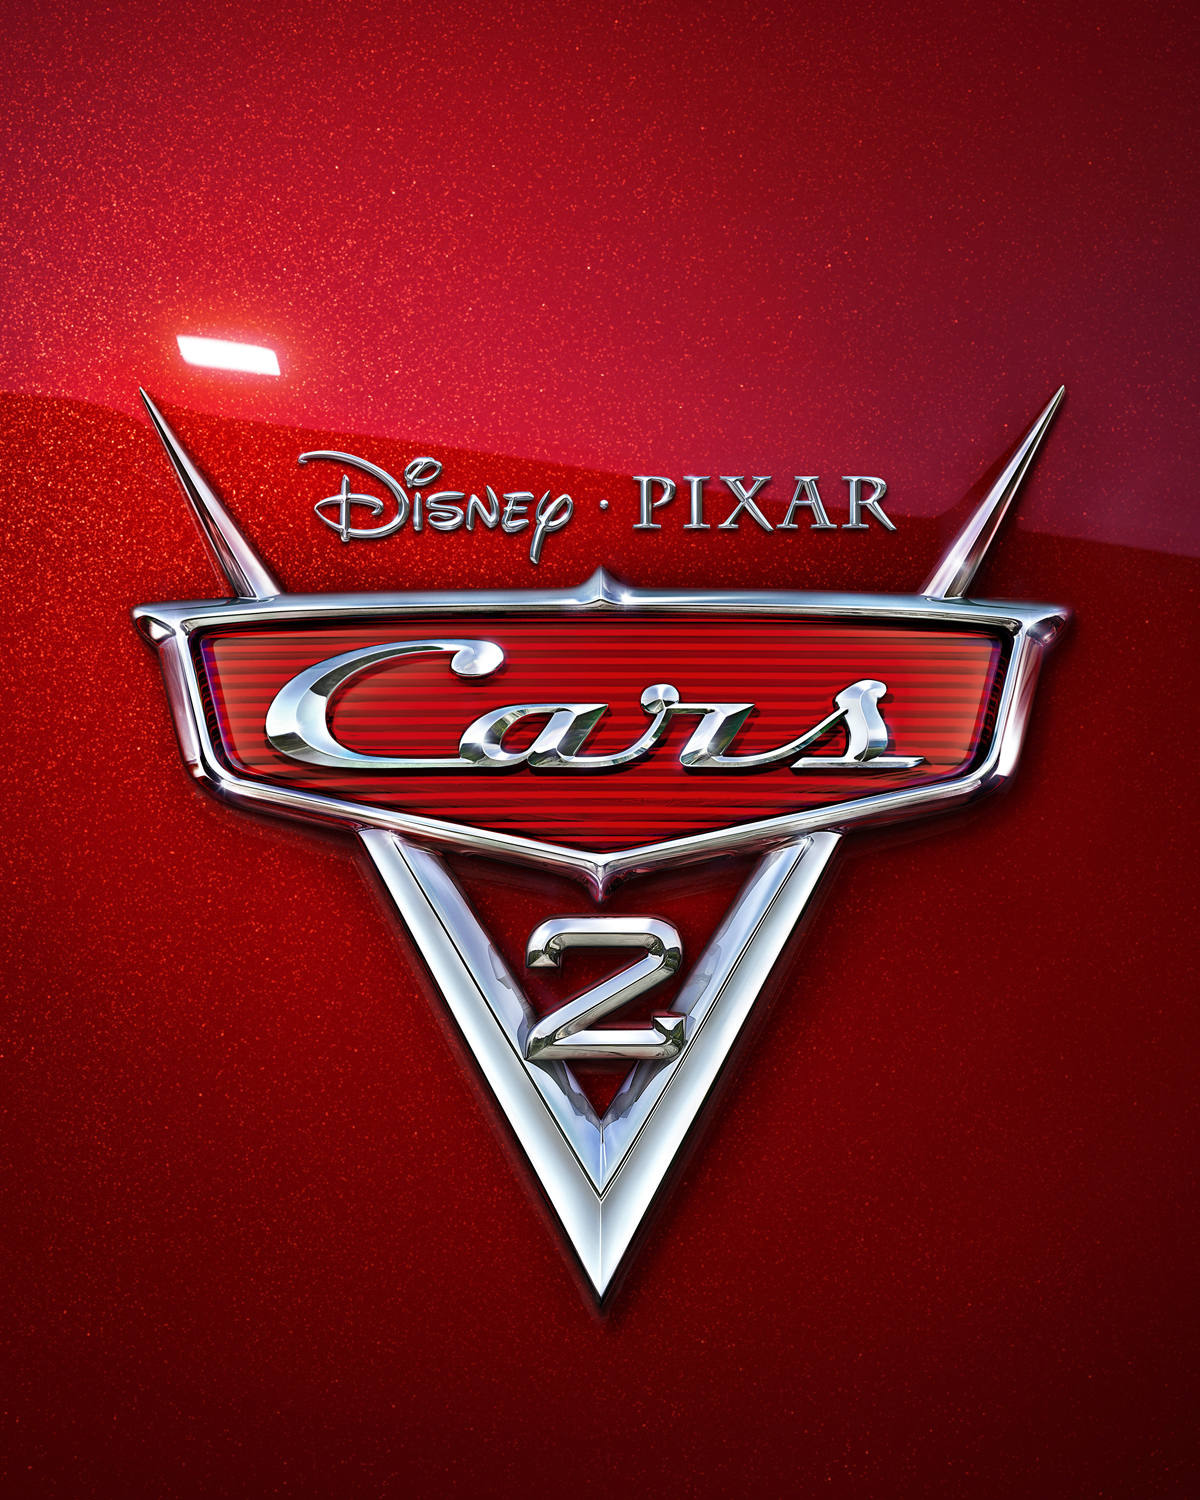 Cars 2/Gallery, Pixar Cars Wiki